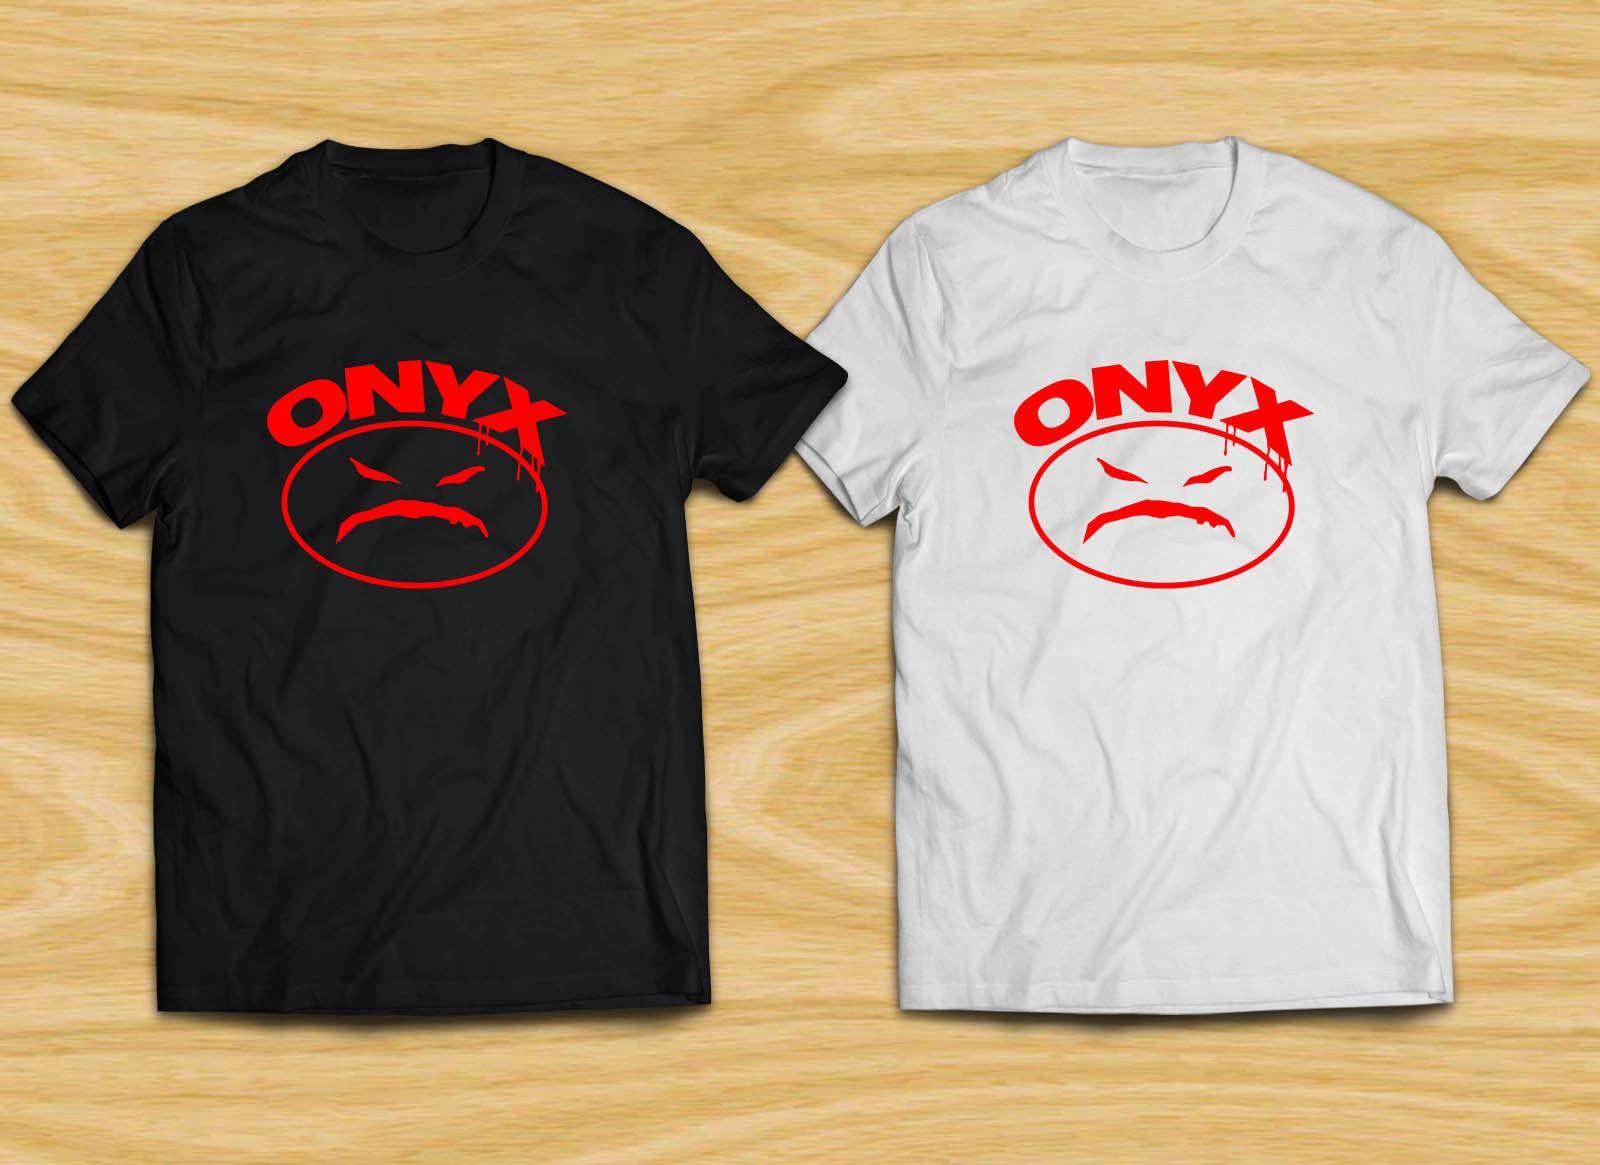 Onyx Logo - ONYX Logo Rap Hip Hop MusicT-shirt Cool xxxtentacion marcus and martinus  tshirt discout hot new top free shipping t-shirt